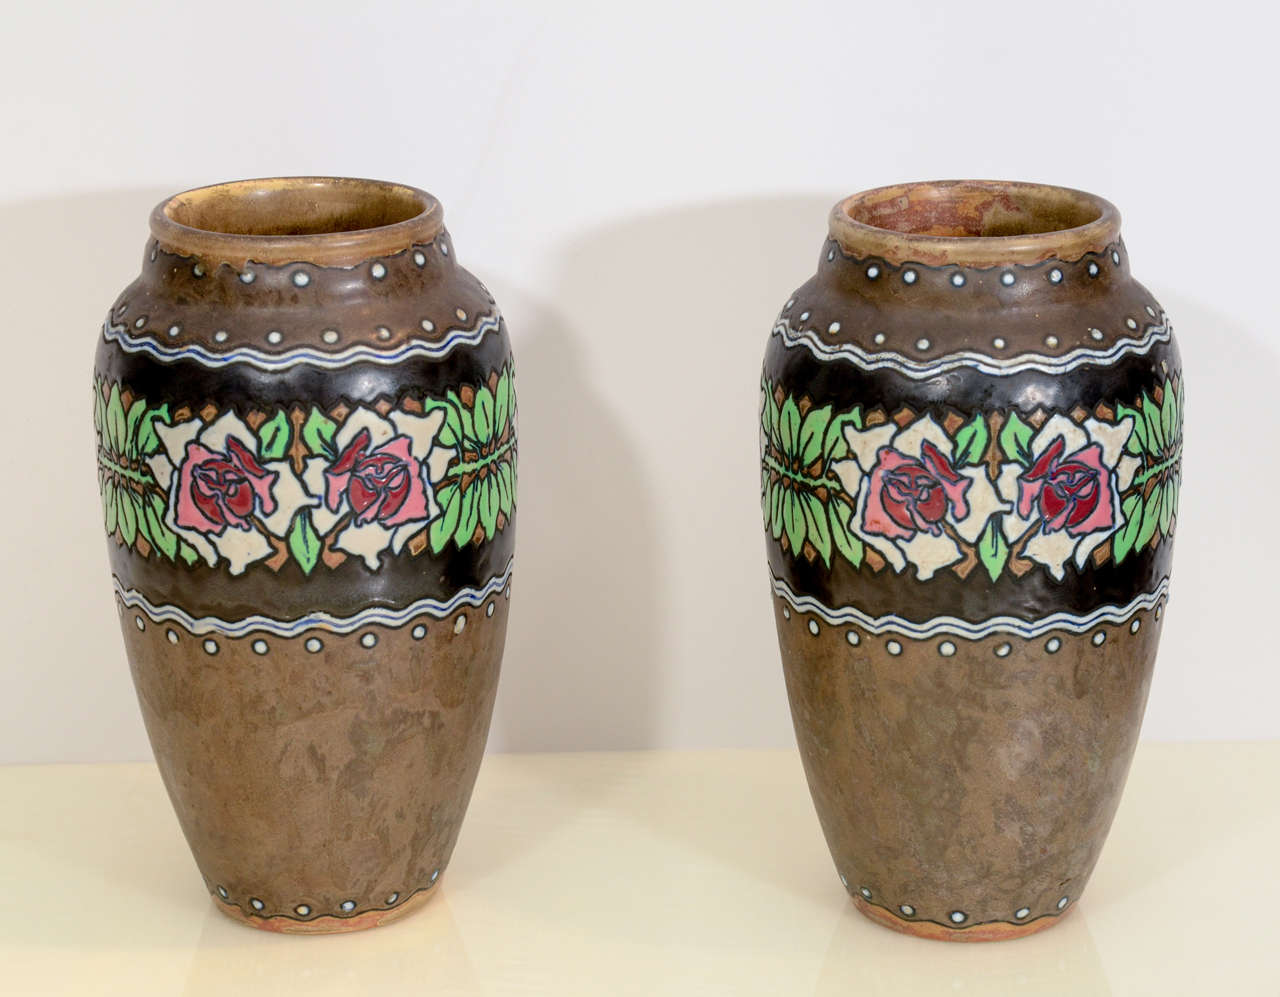 Brown stoneware ceramic with pastel glazed flowers decoration.